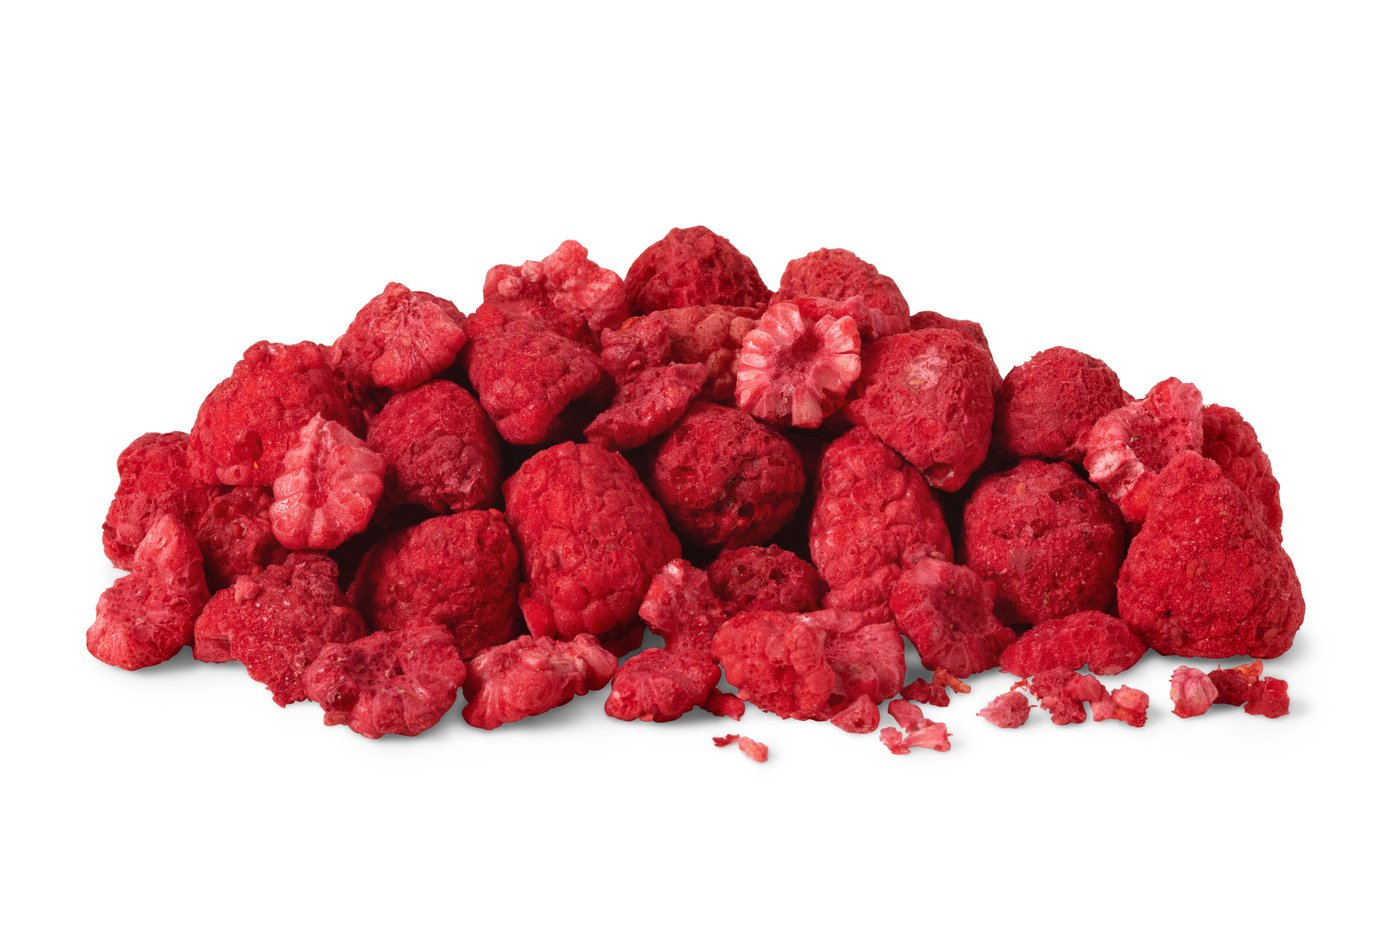 Freeze-Dried Raspberries image zoom